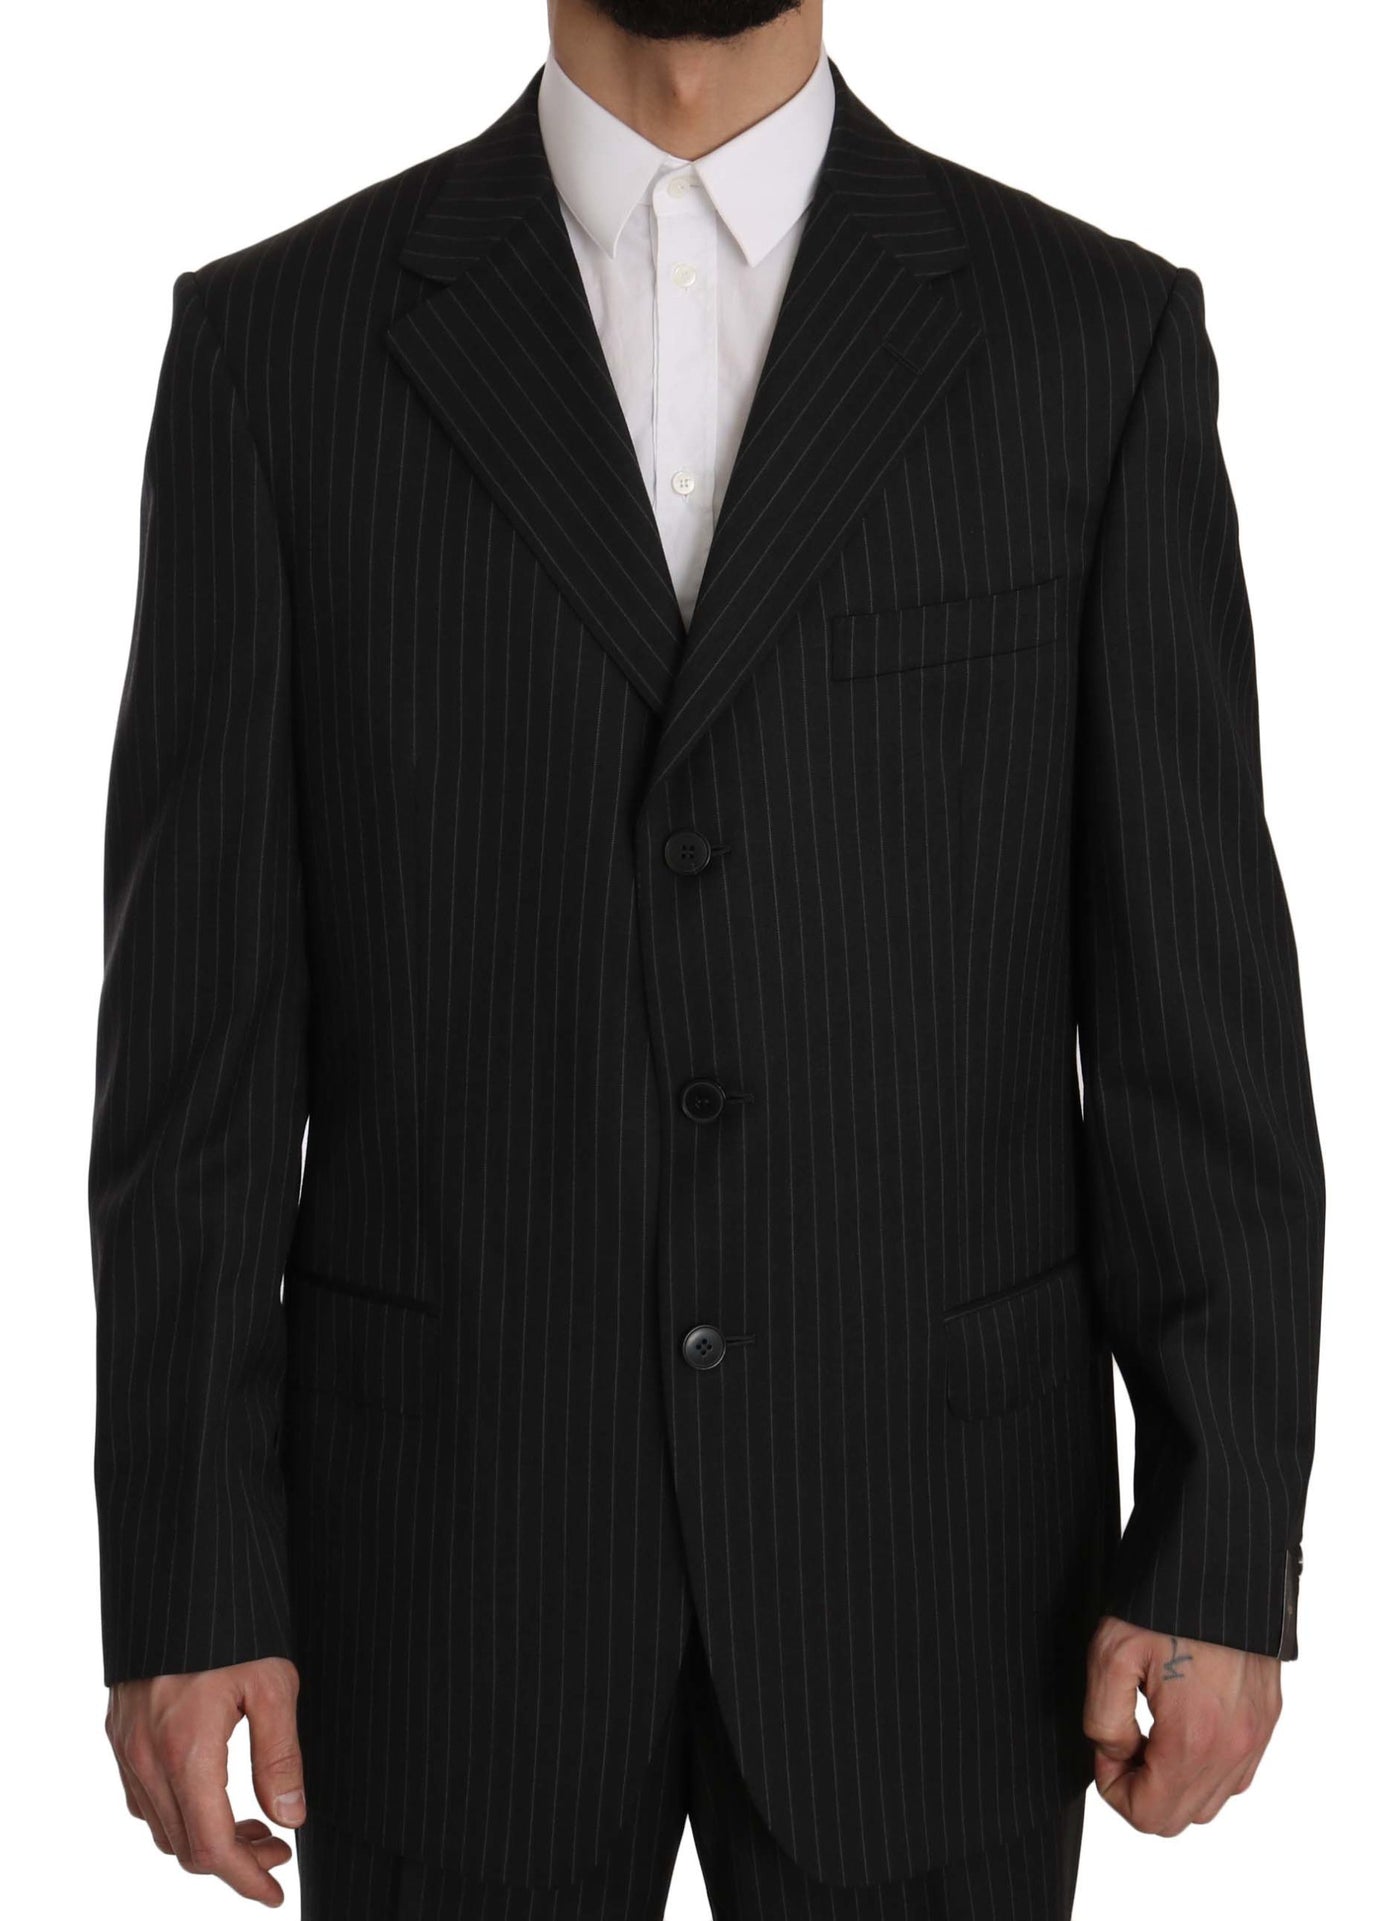 Z ZEGNA Black Striped Two Piece 3 Button 100% Wool Suit